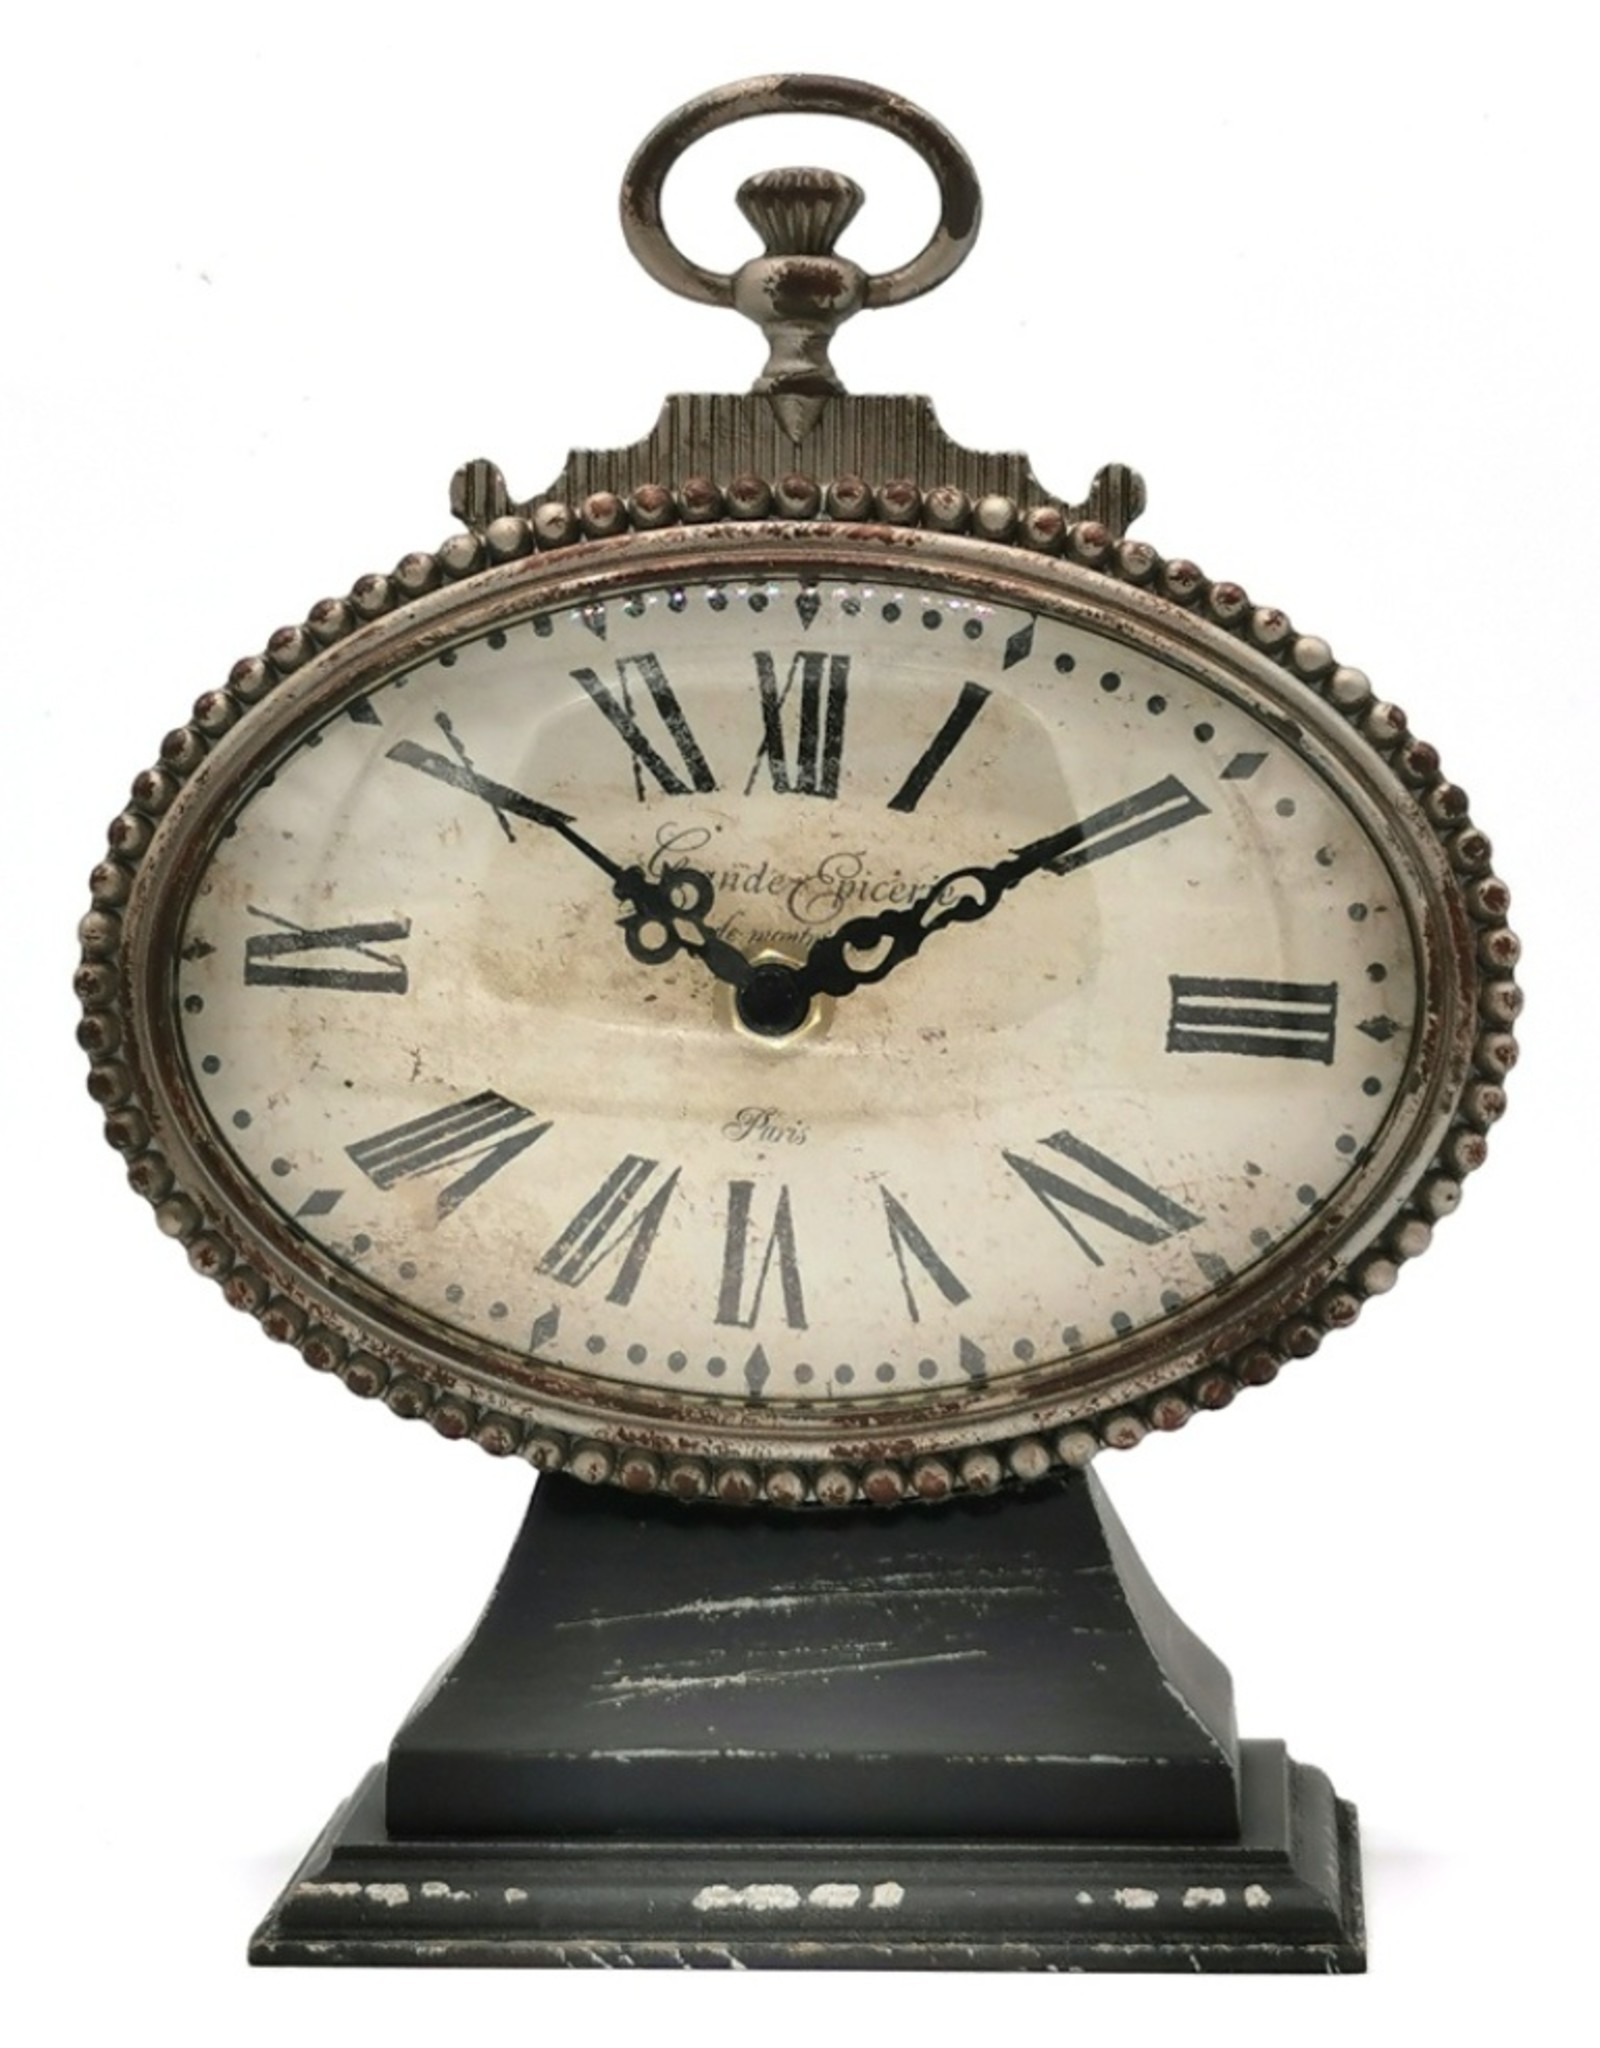 Trukado Miscellaneous - Vintage Style Standing Clock (metal)